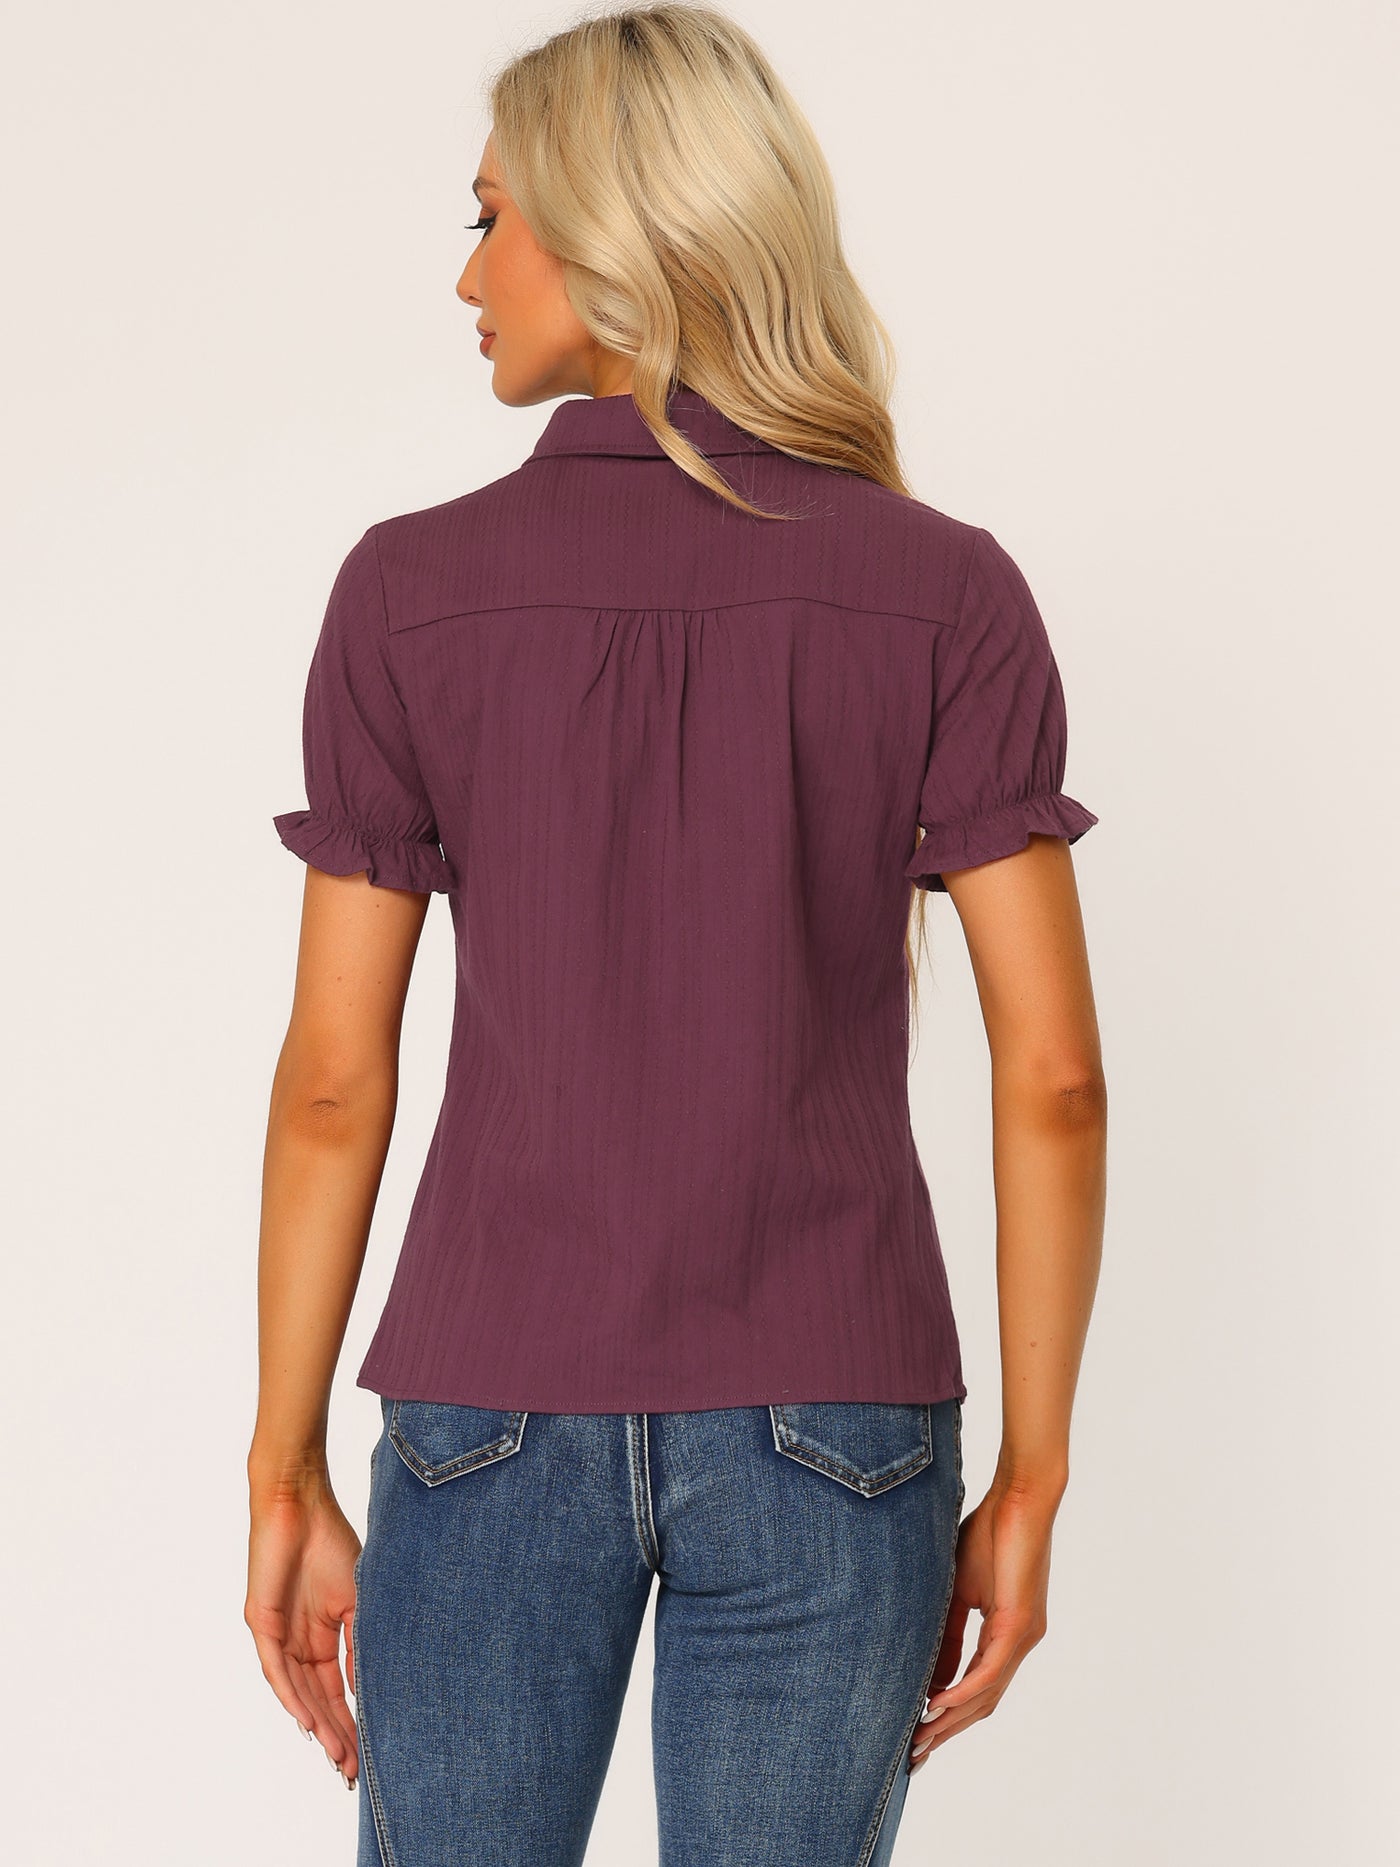 Allegra K Cotton Frilled Top Turndown Collar Solid Blouse Shirt